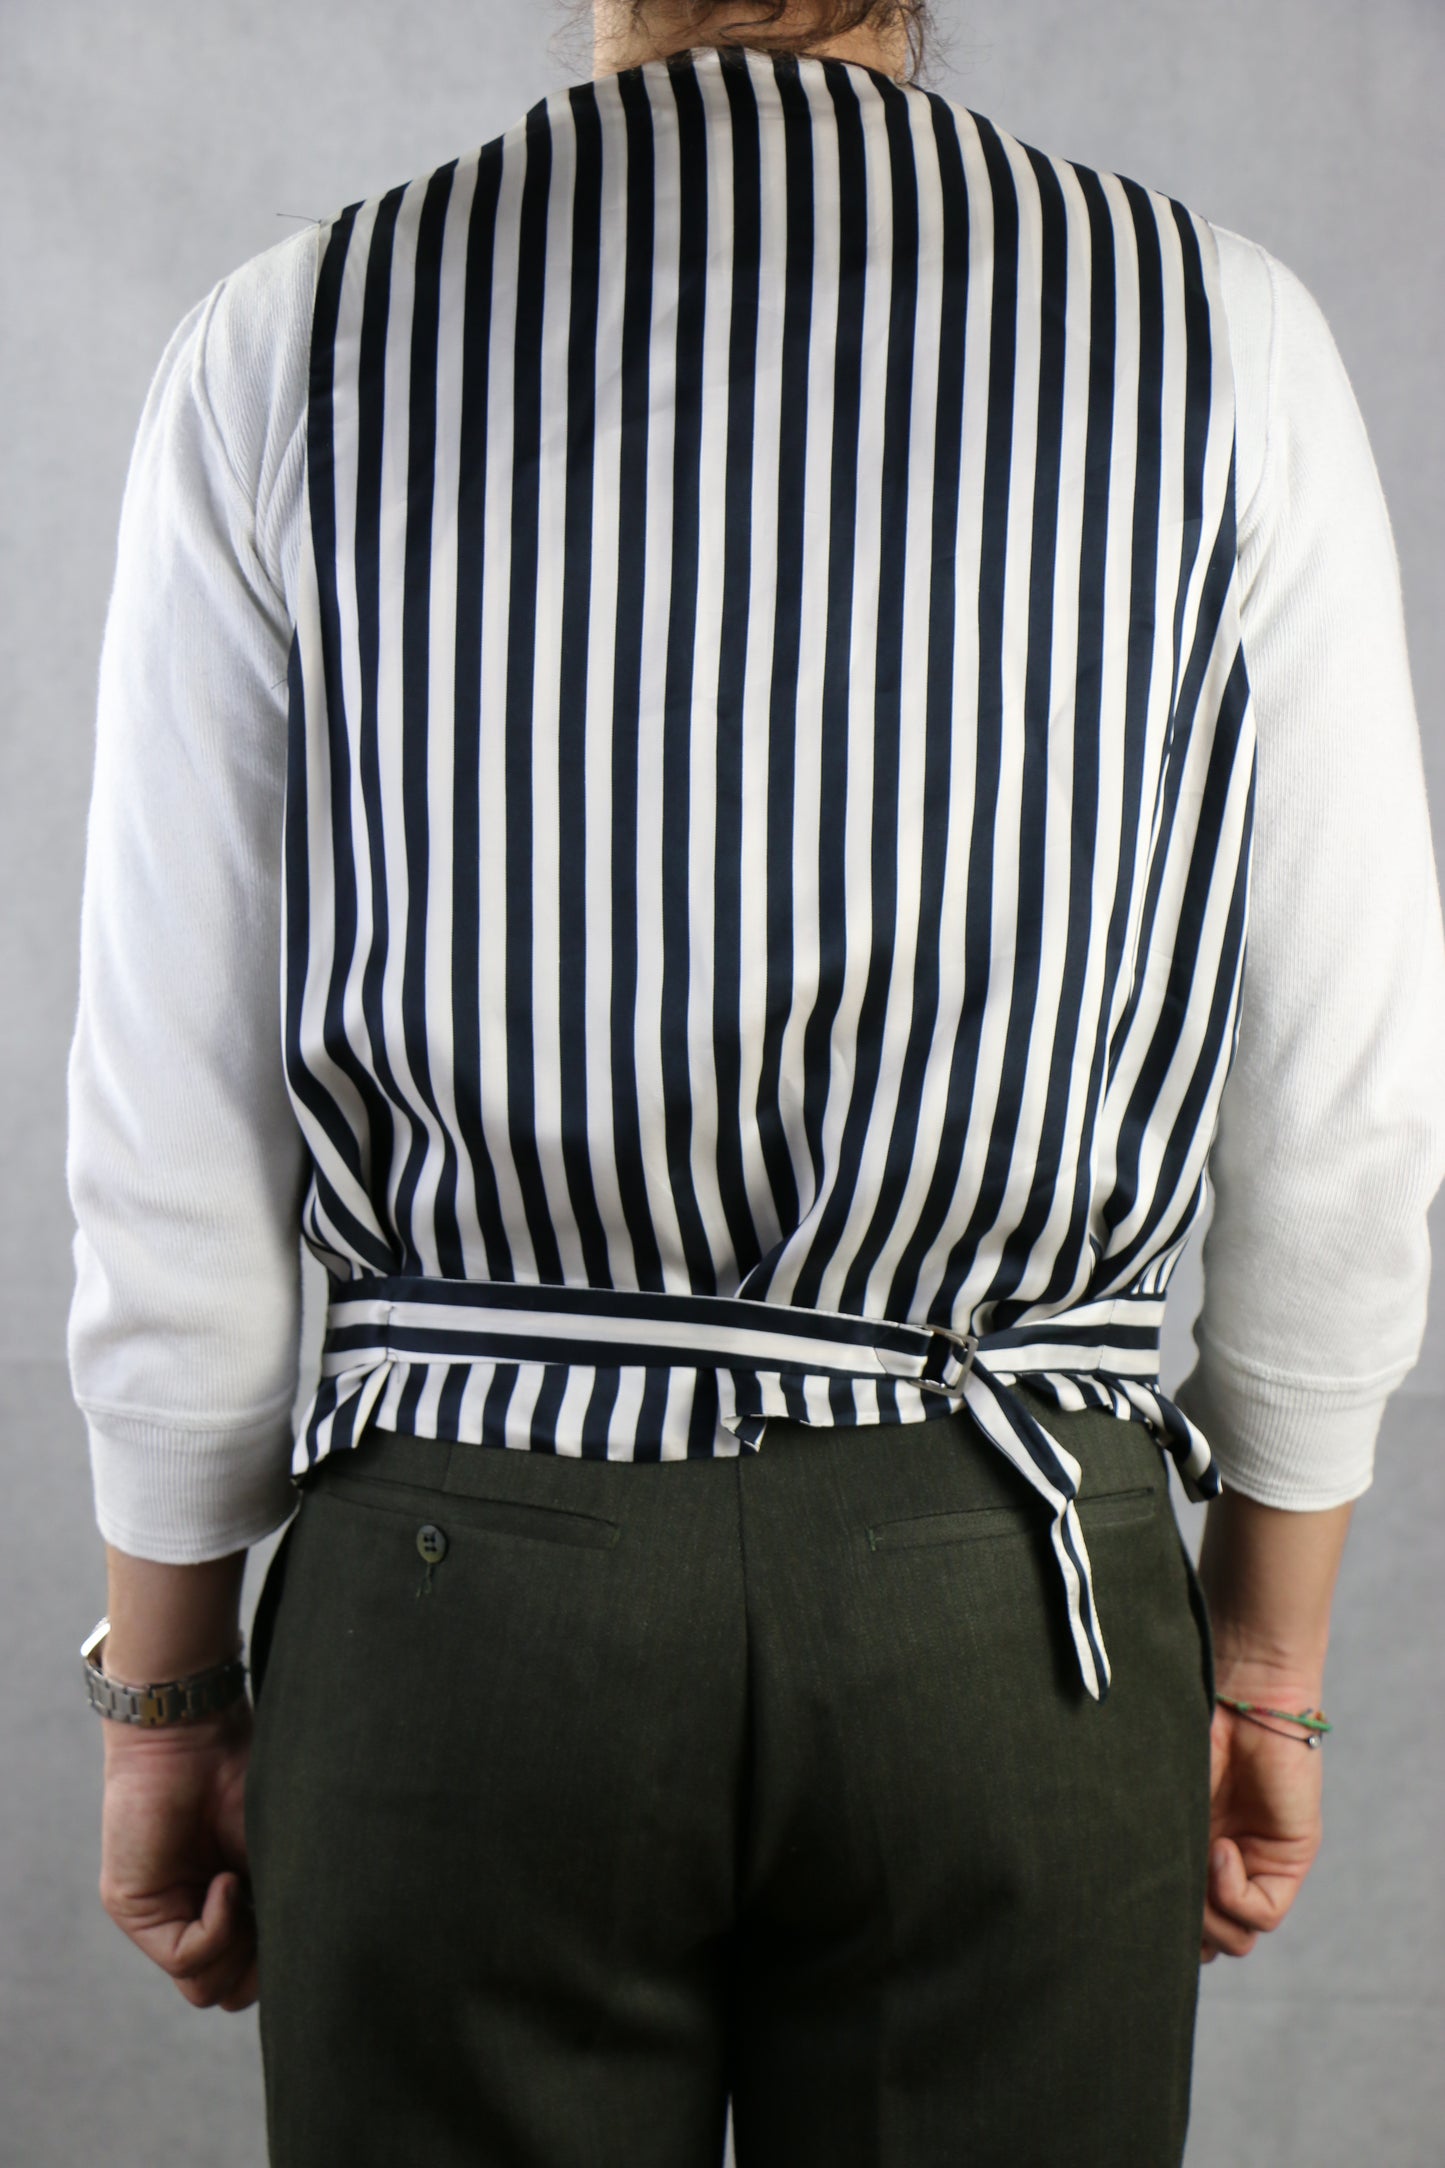 Moschino 'Smiley' Vest - vintage clothing clochard92.com